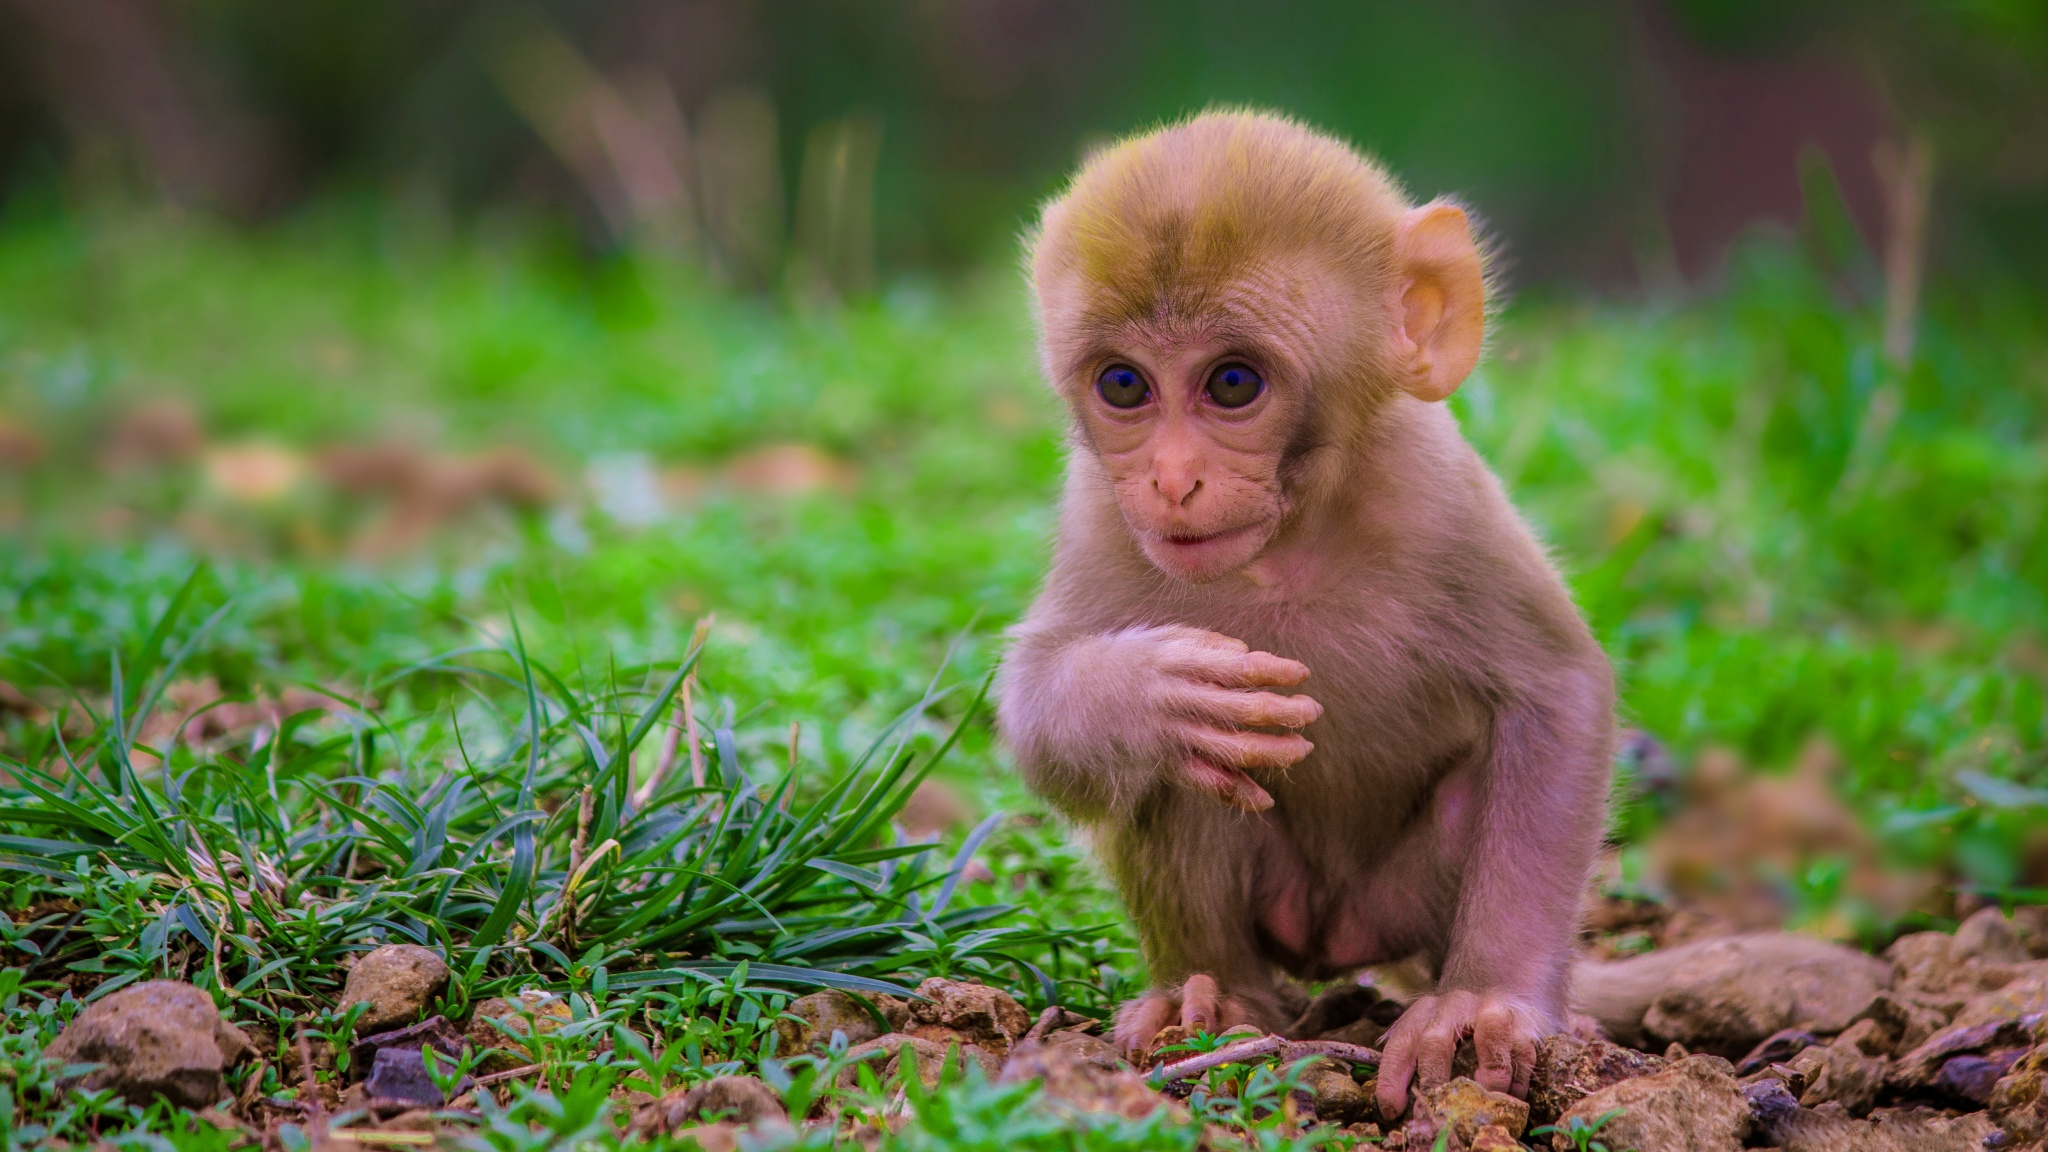 Cute Baby Monkey фото в формате jpeg, для всех людей открыли доступ